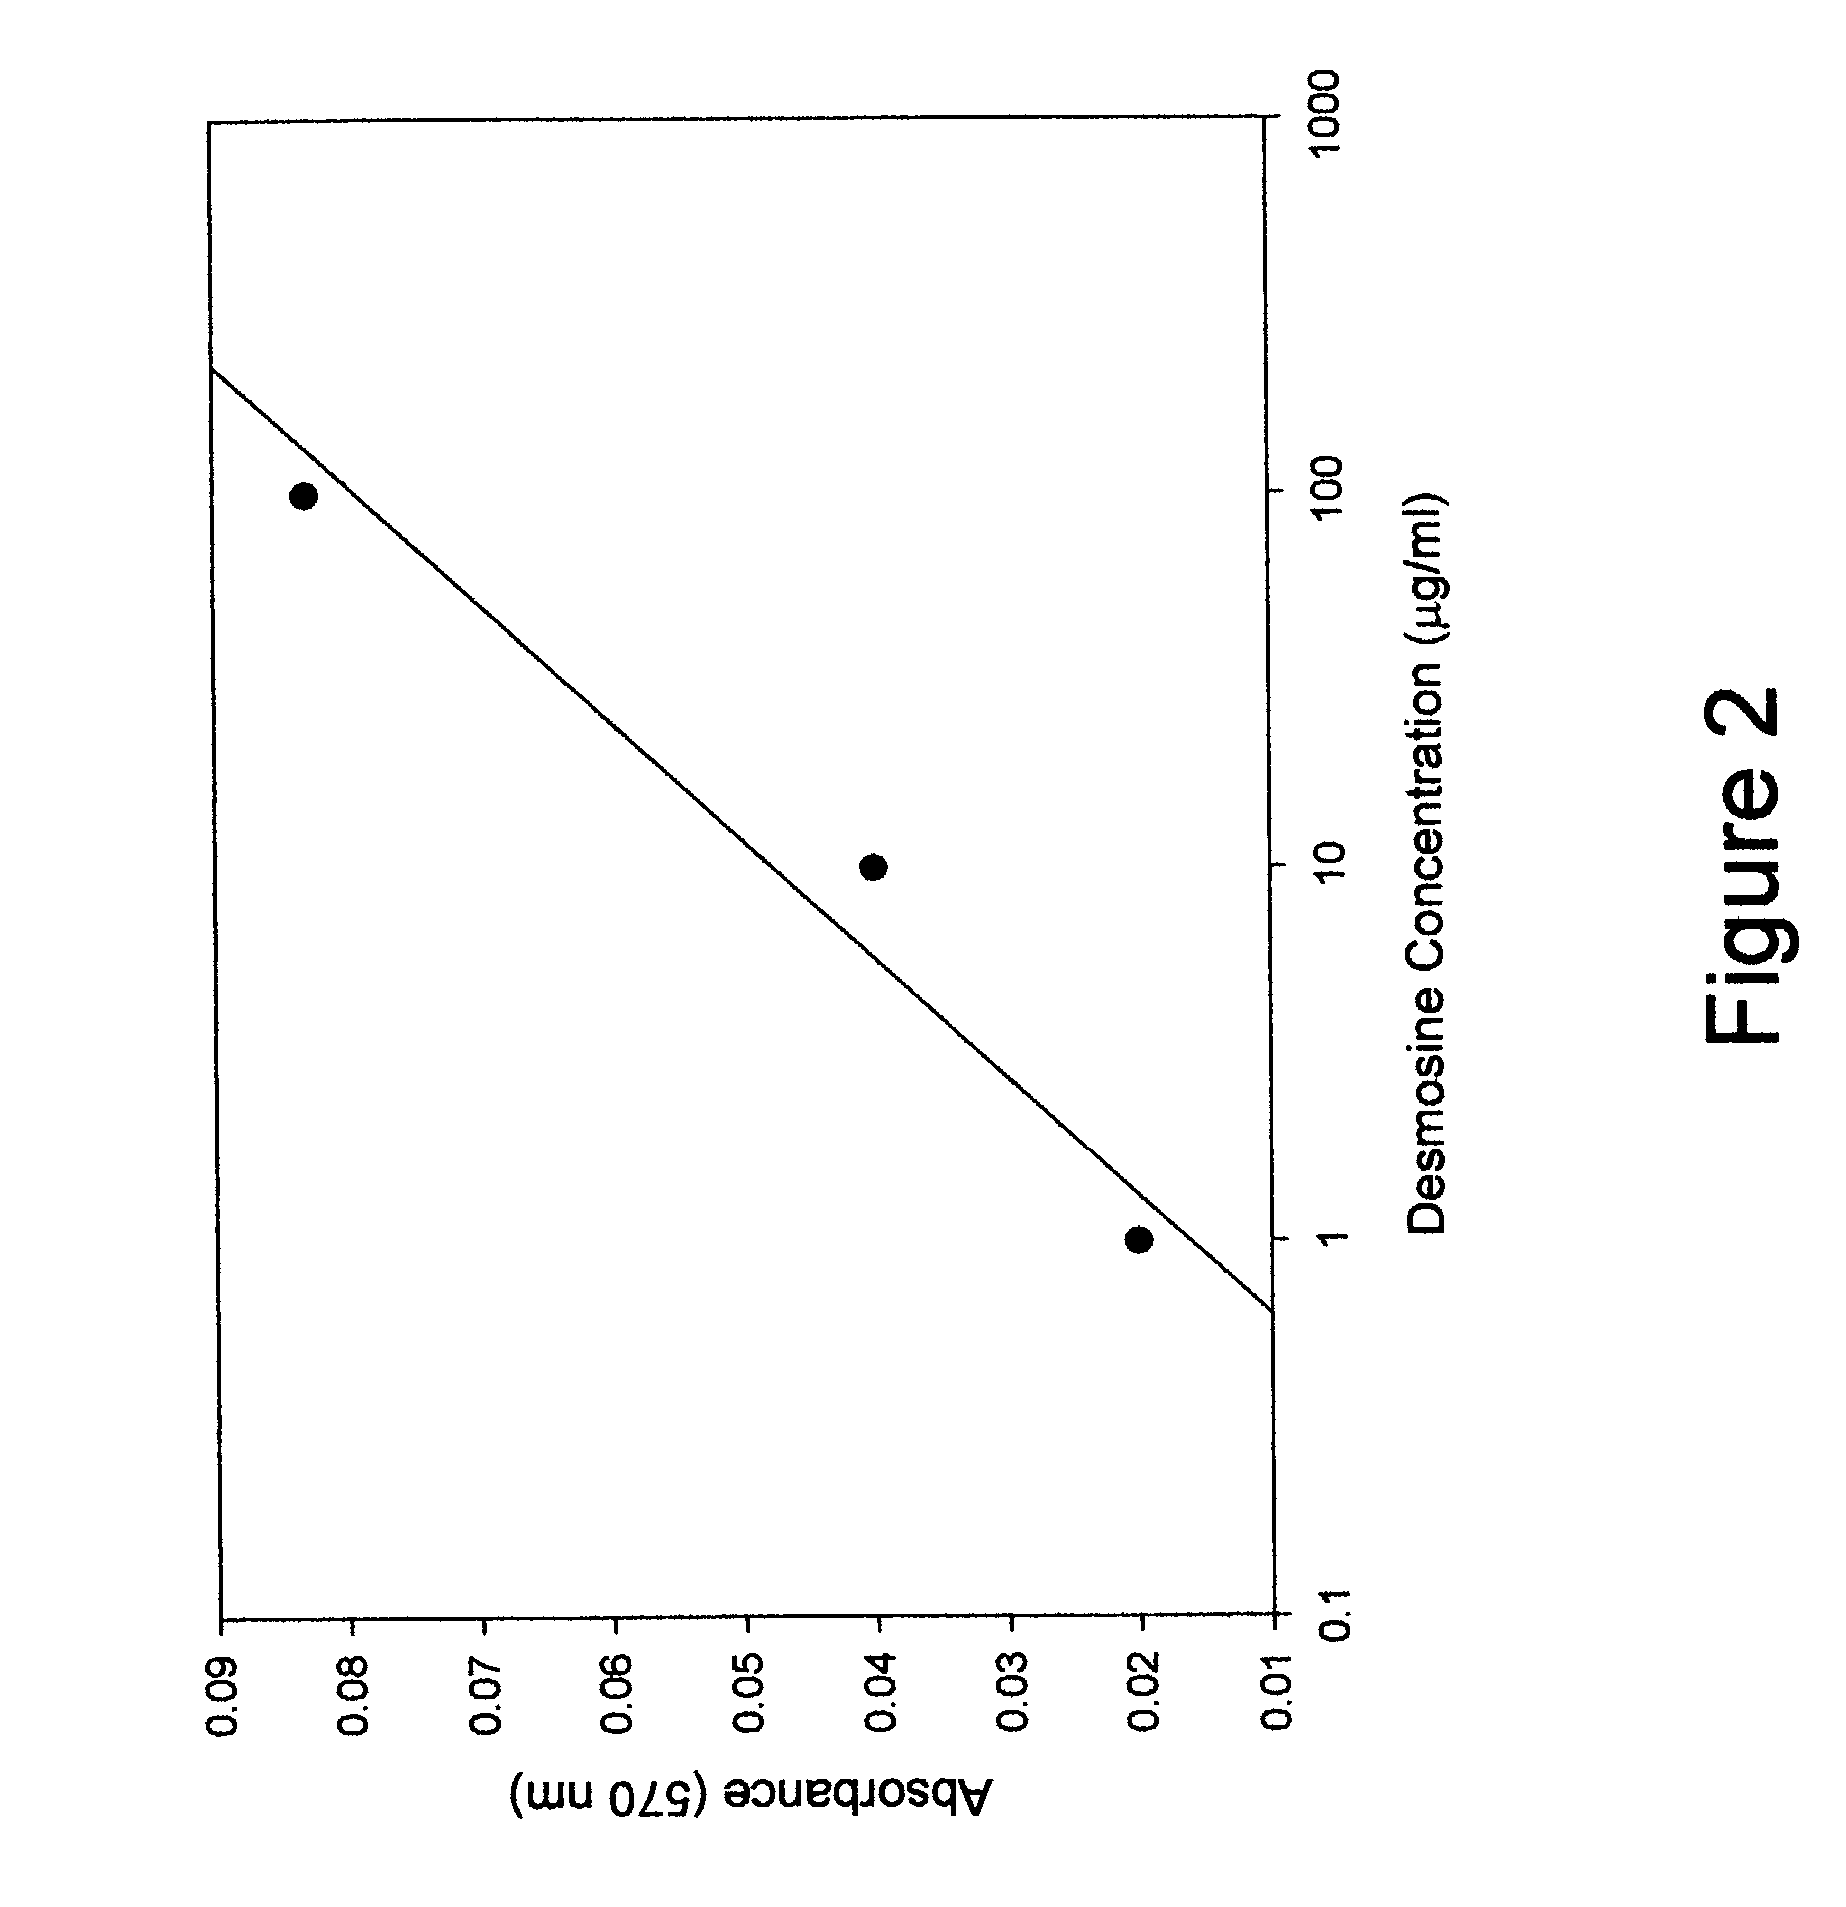 Measurement of elastic fiber breakdown products in sputum